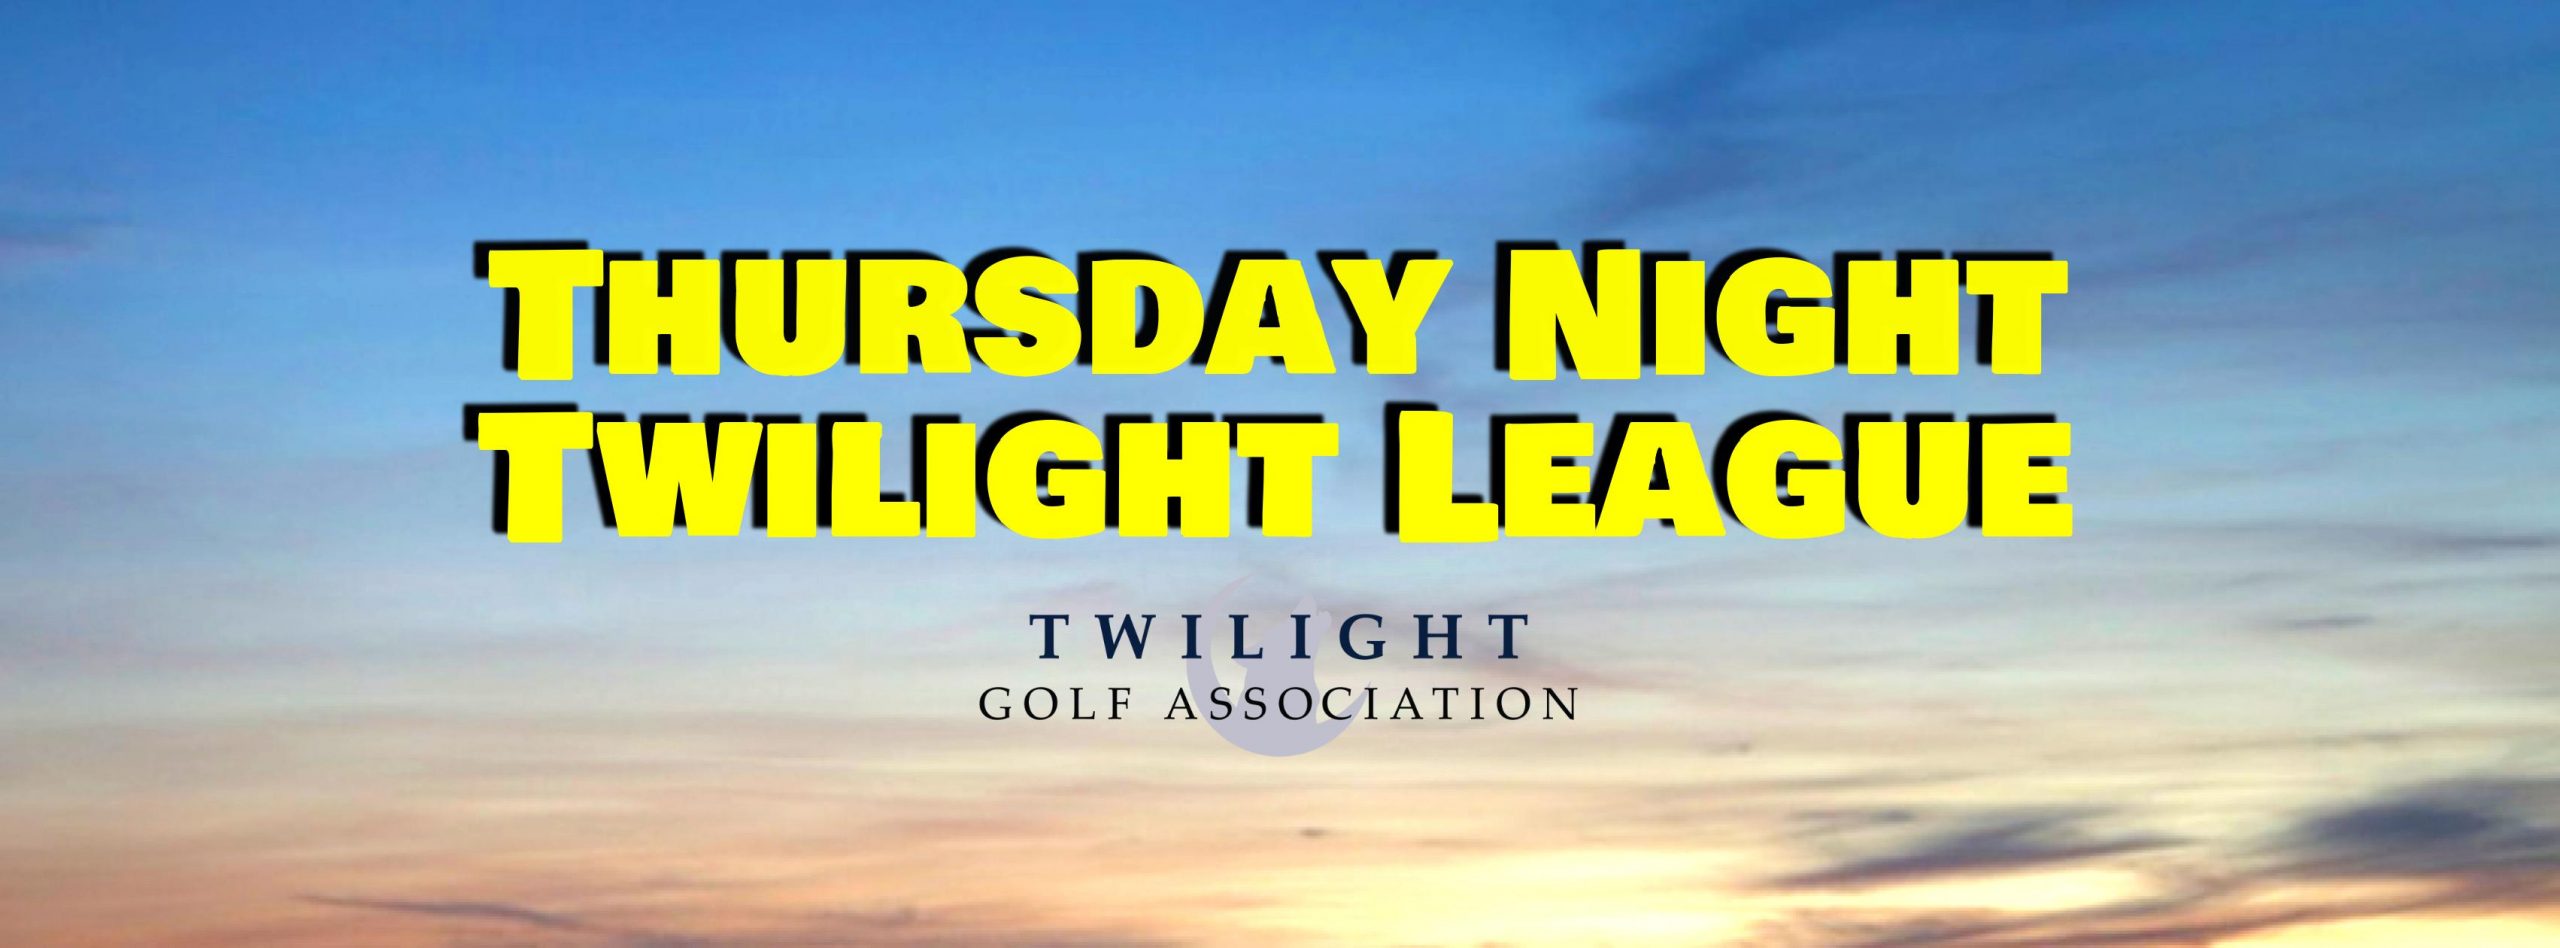 Thursday Twilight League at Compass Pointe Golf Course